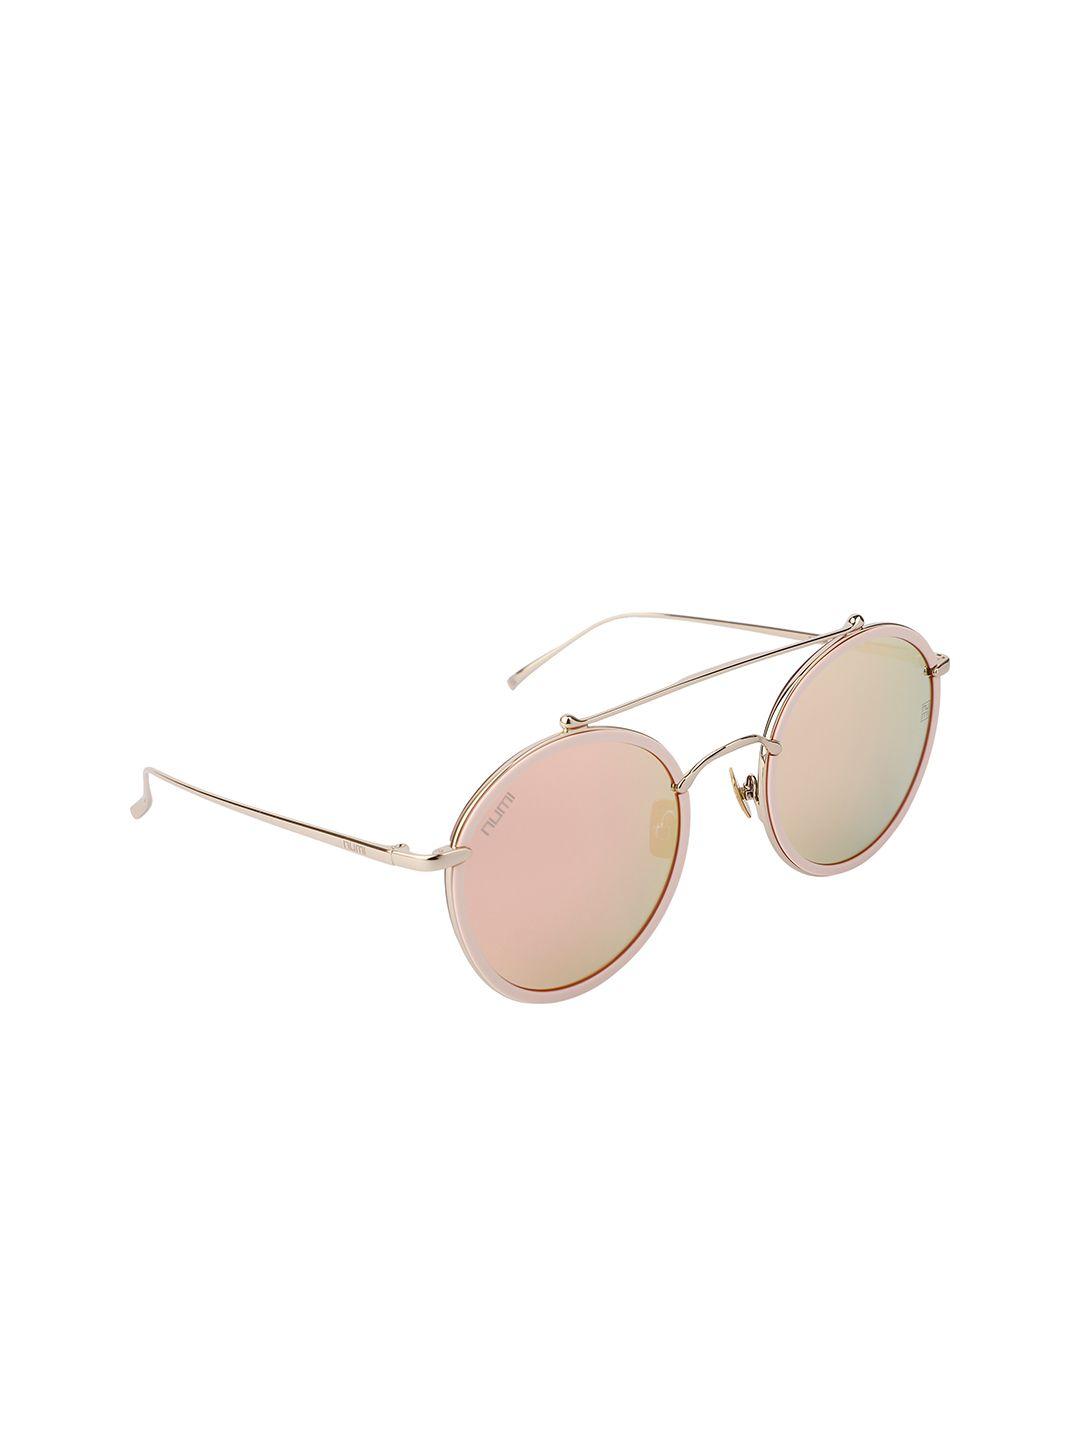 numi women pink & gold-toned full rim oval sunglasses